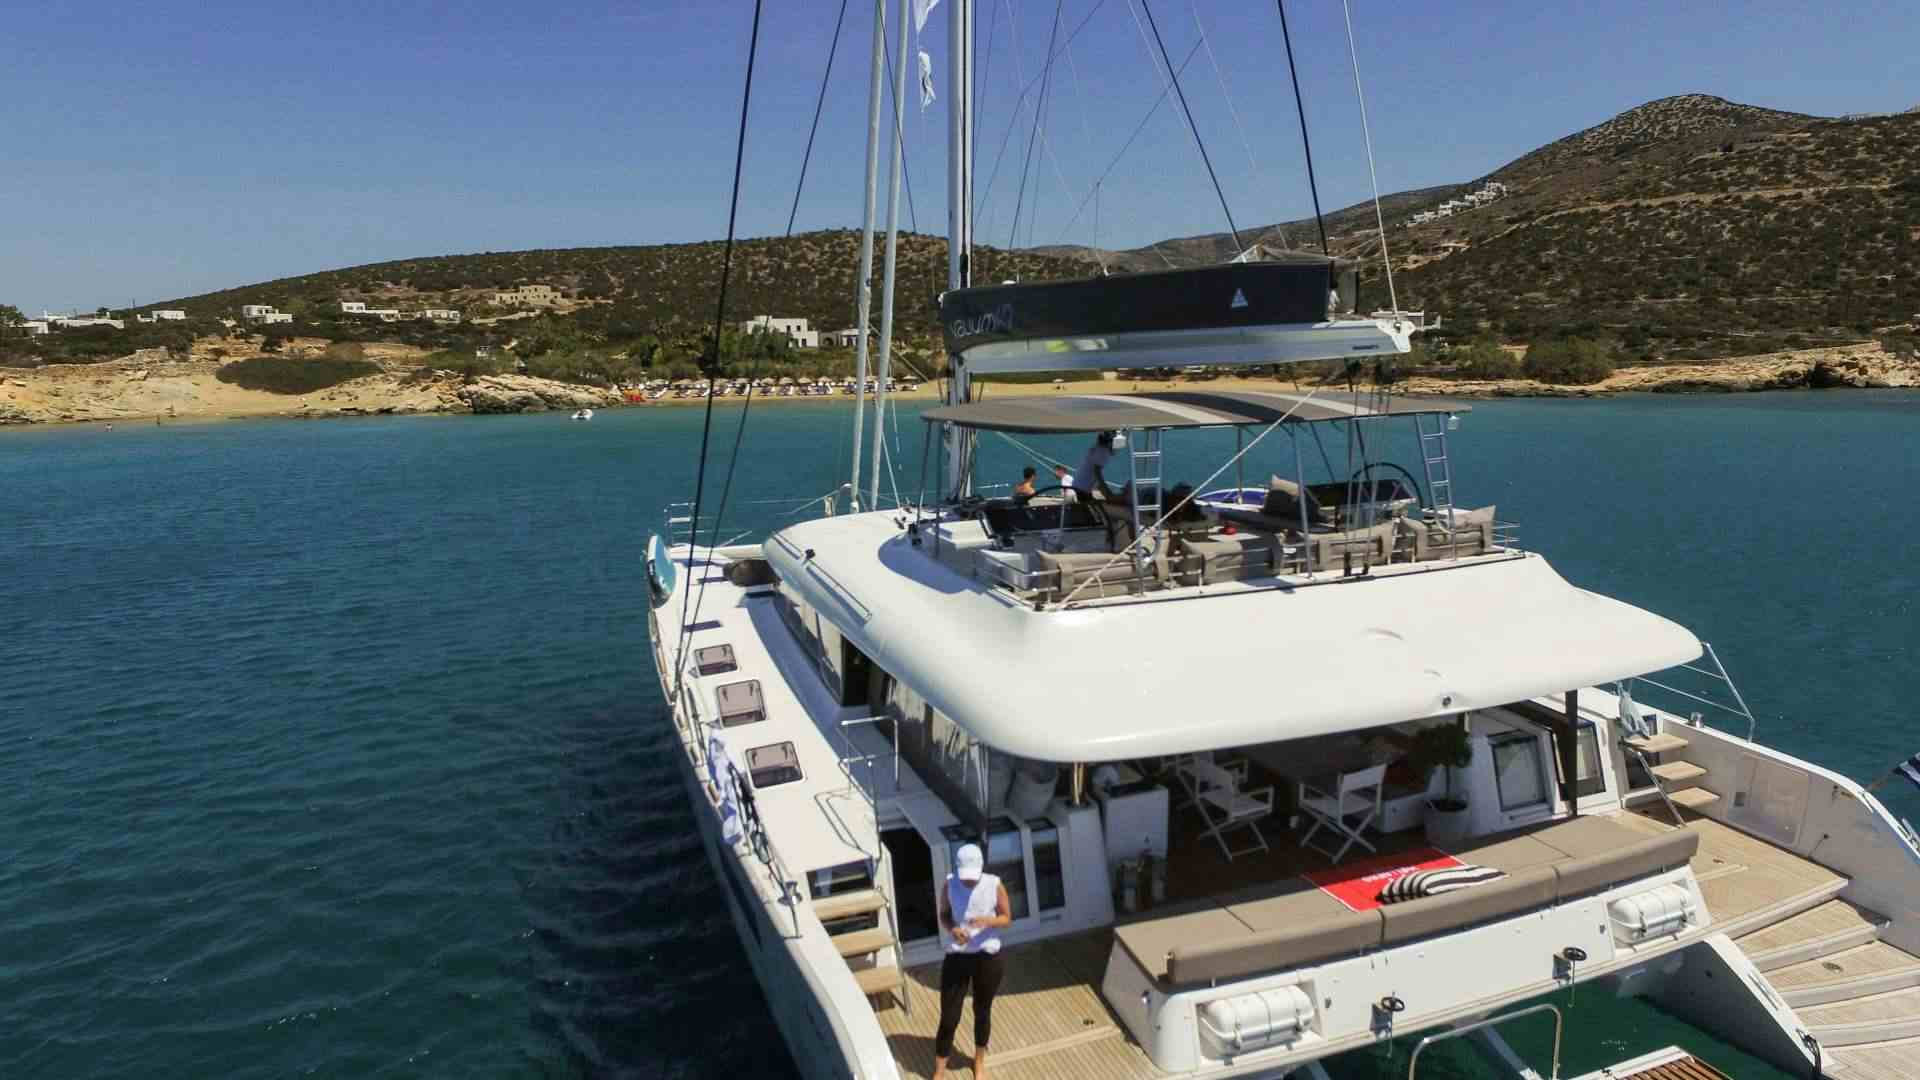 valium62 - Yacht Charter Porto Koufo & Boat hire in Greece 1